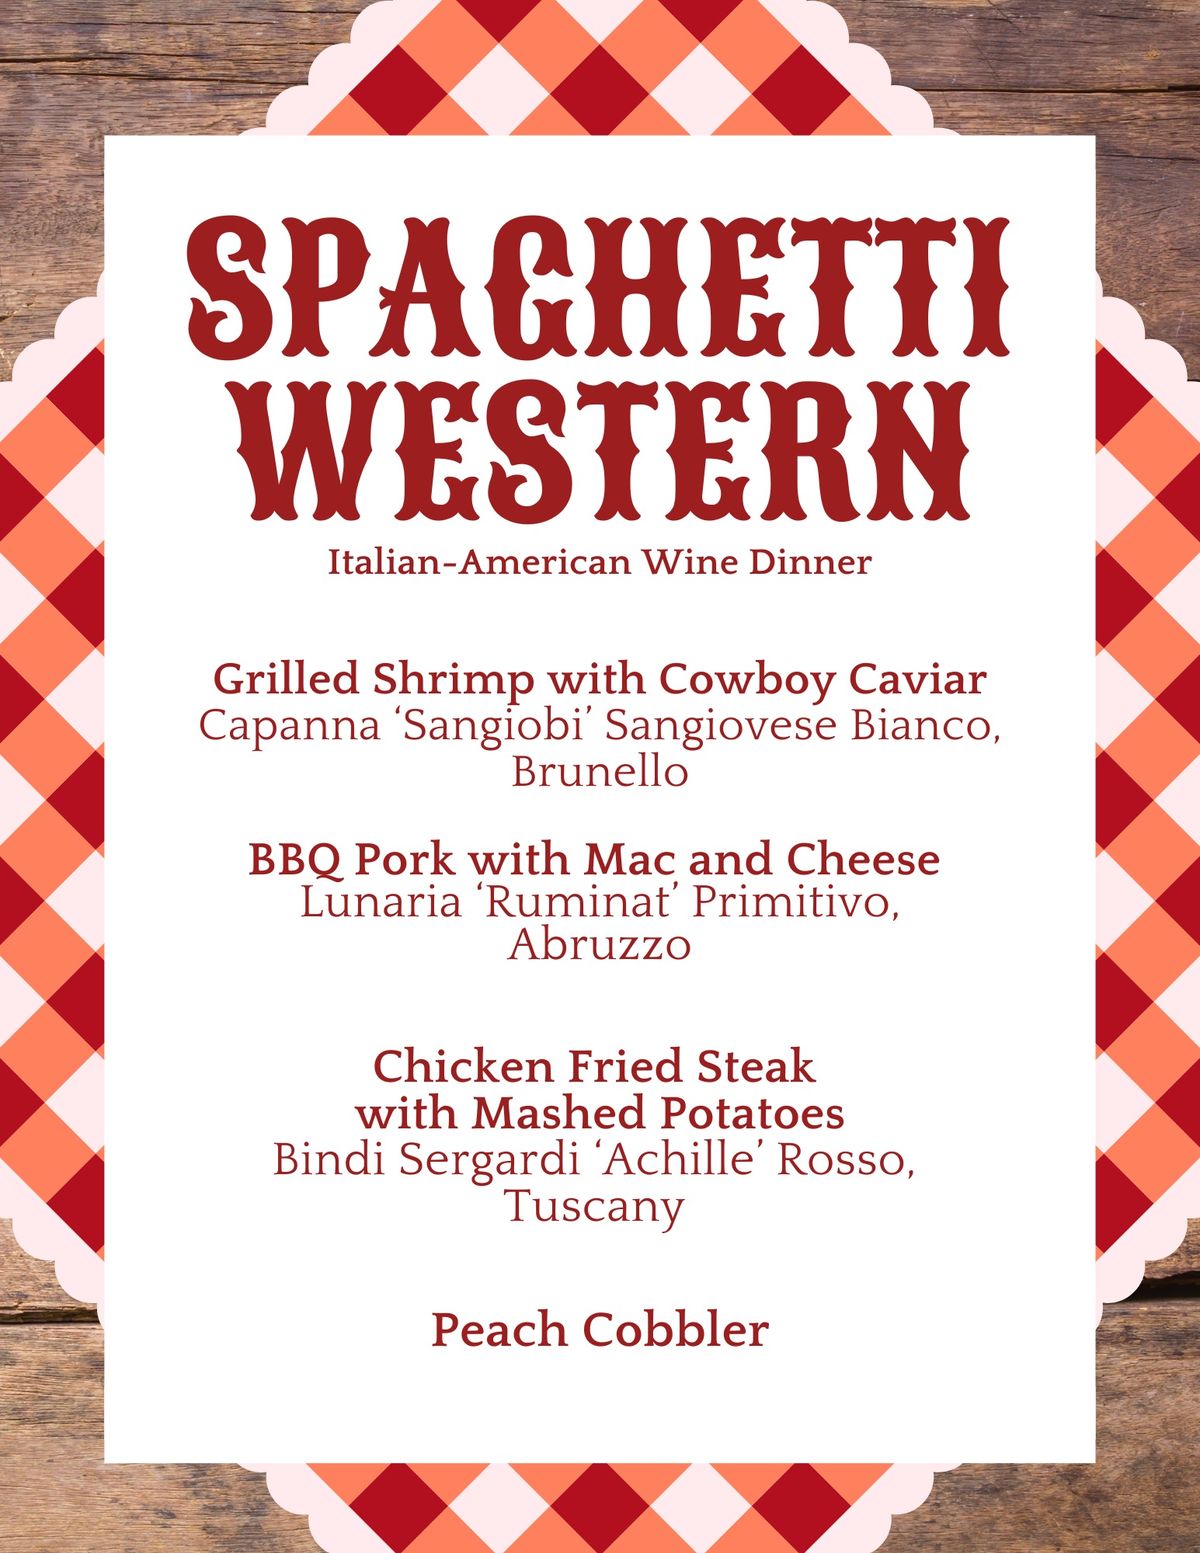 Spaghetti Western Wine Dinner